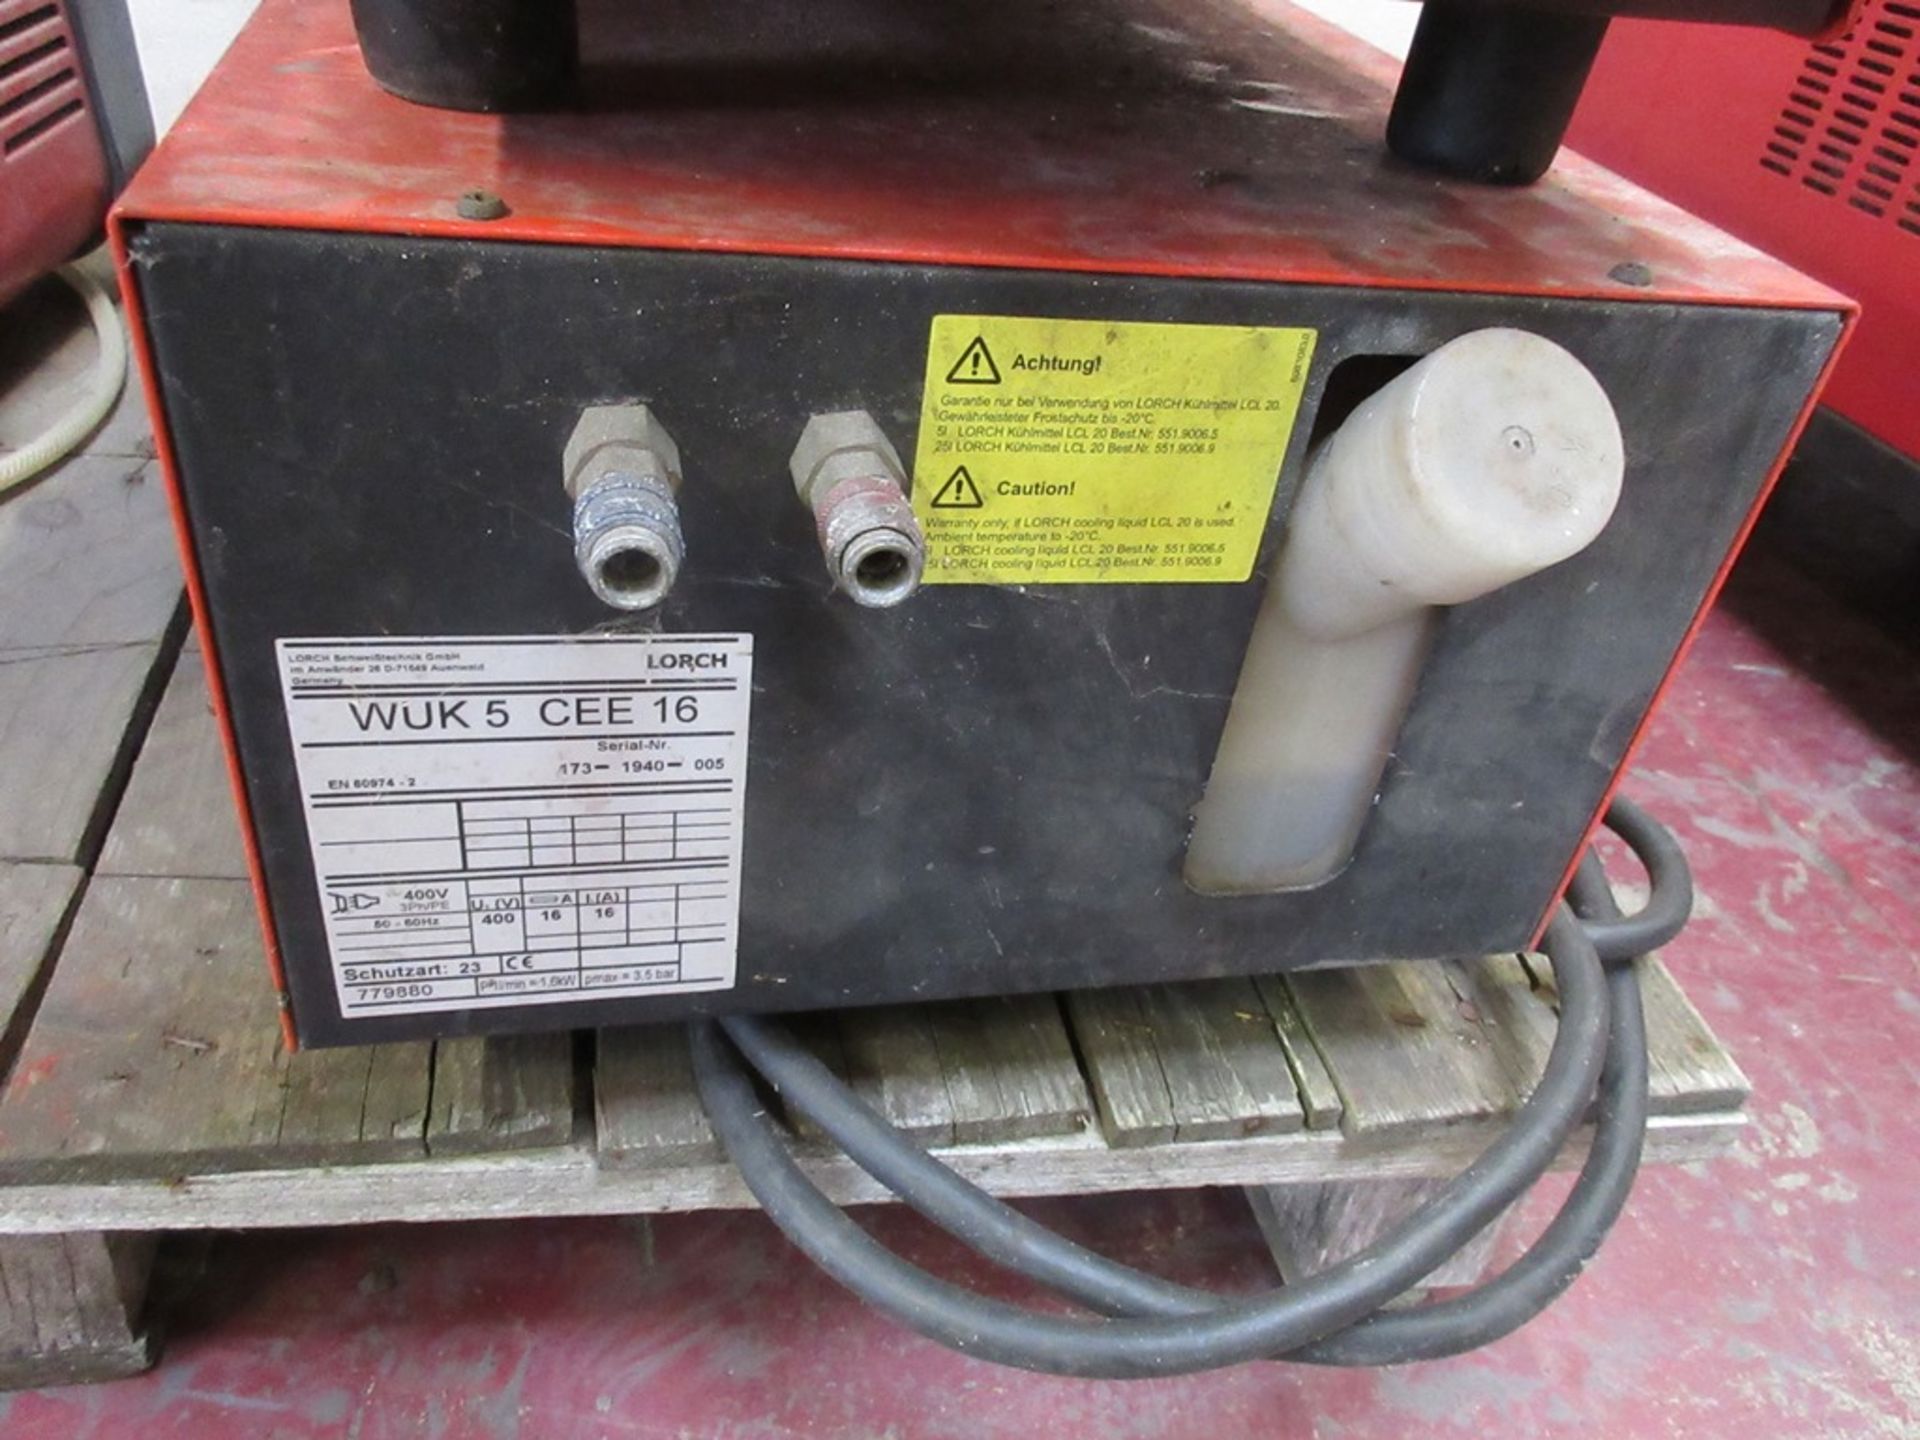 Lorch V30 mobile tig welder, WUK 55 CEE 16 serial no. 173-1940-005 - Image 3 of 4